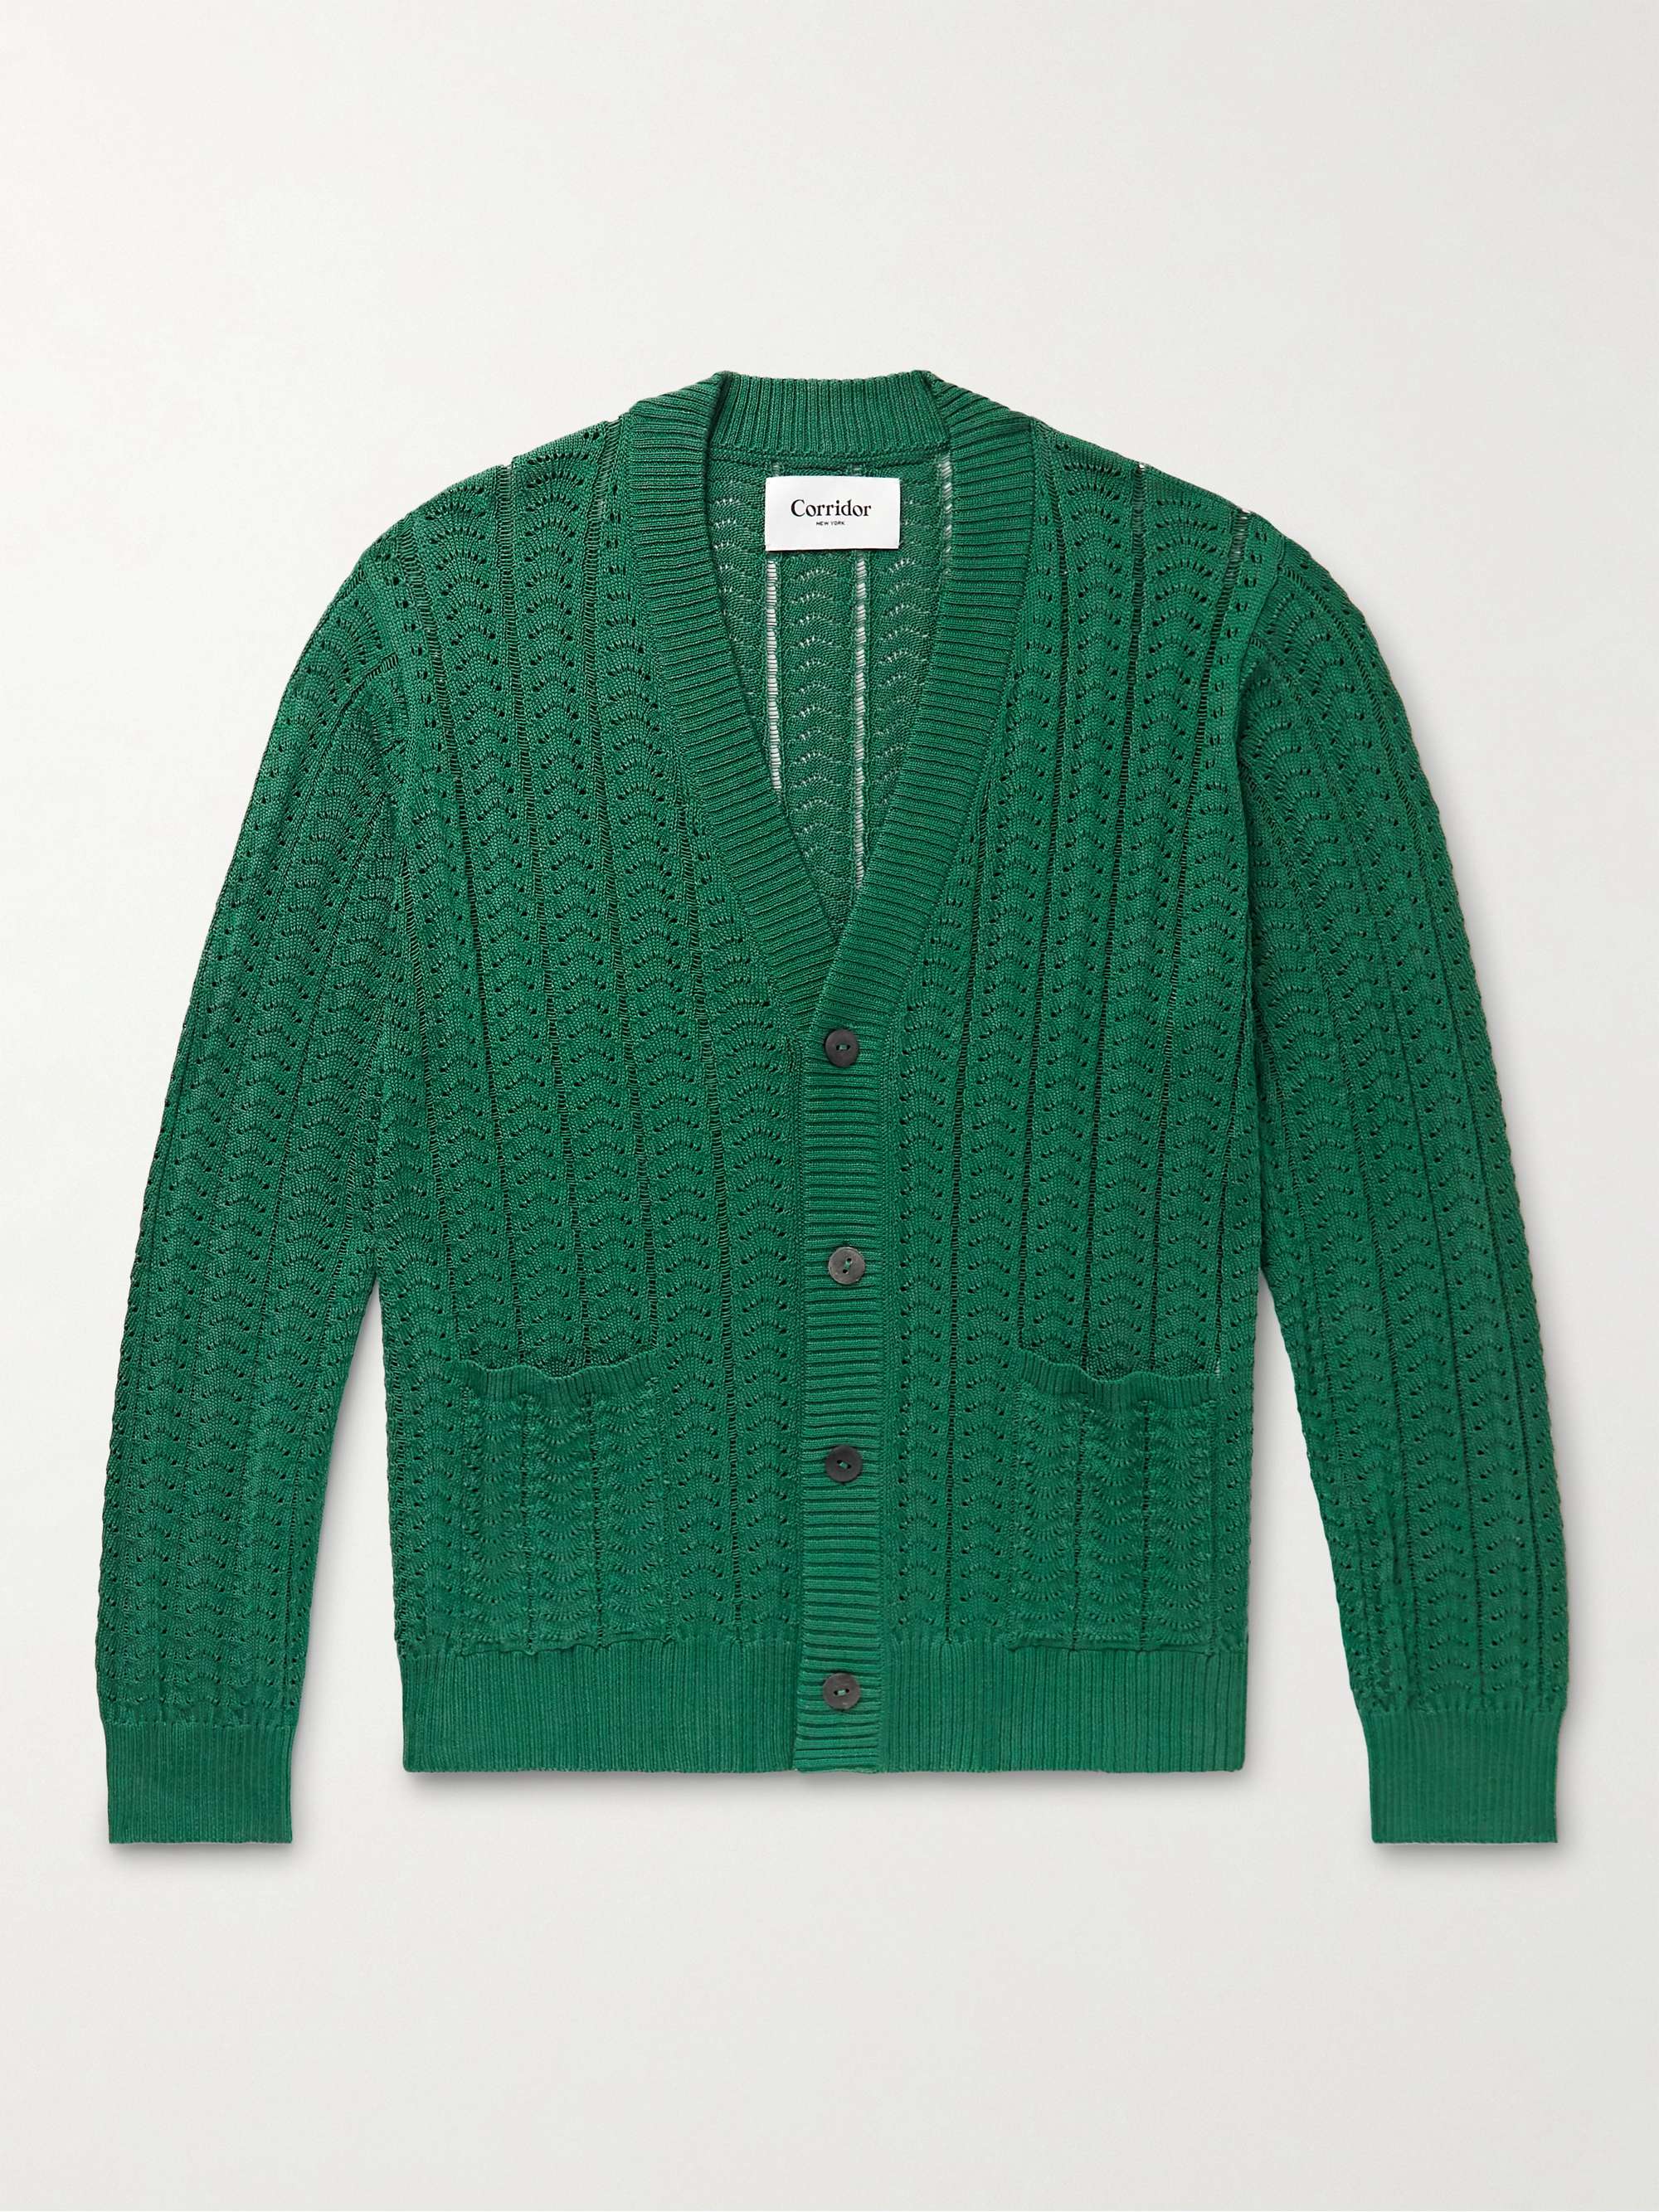 CORRIDOR Crocheted Pima Cotton Cardigan for Men | MR PORTER